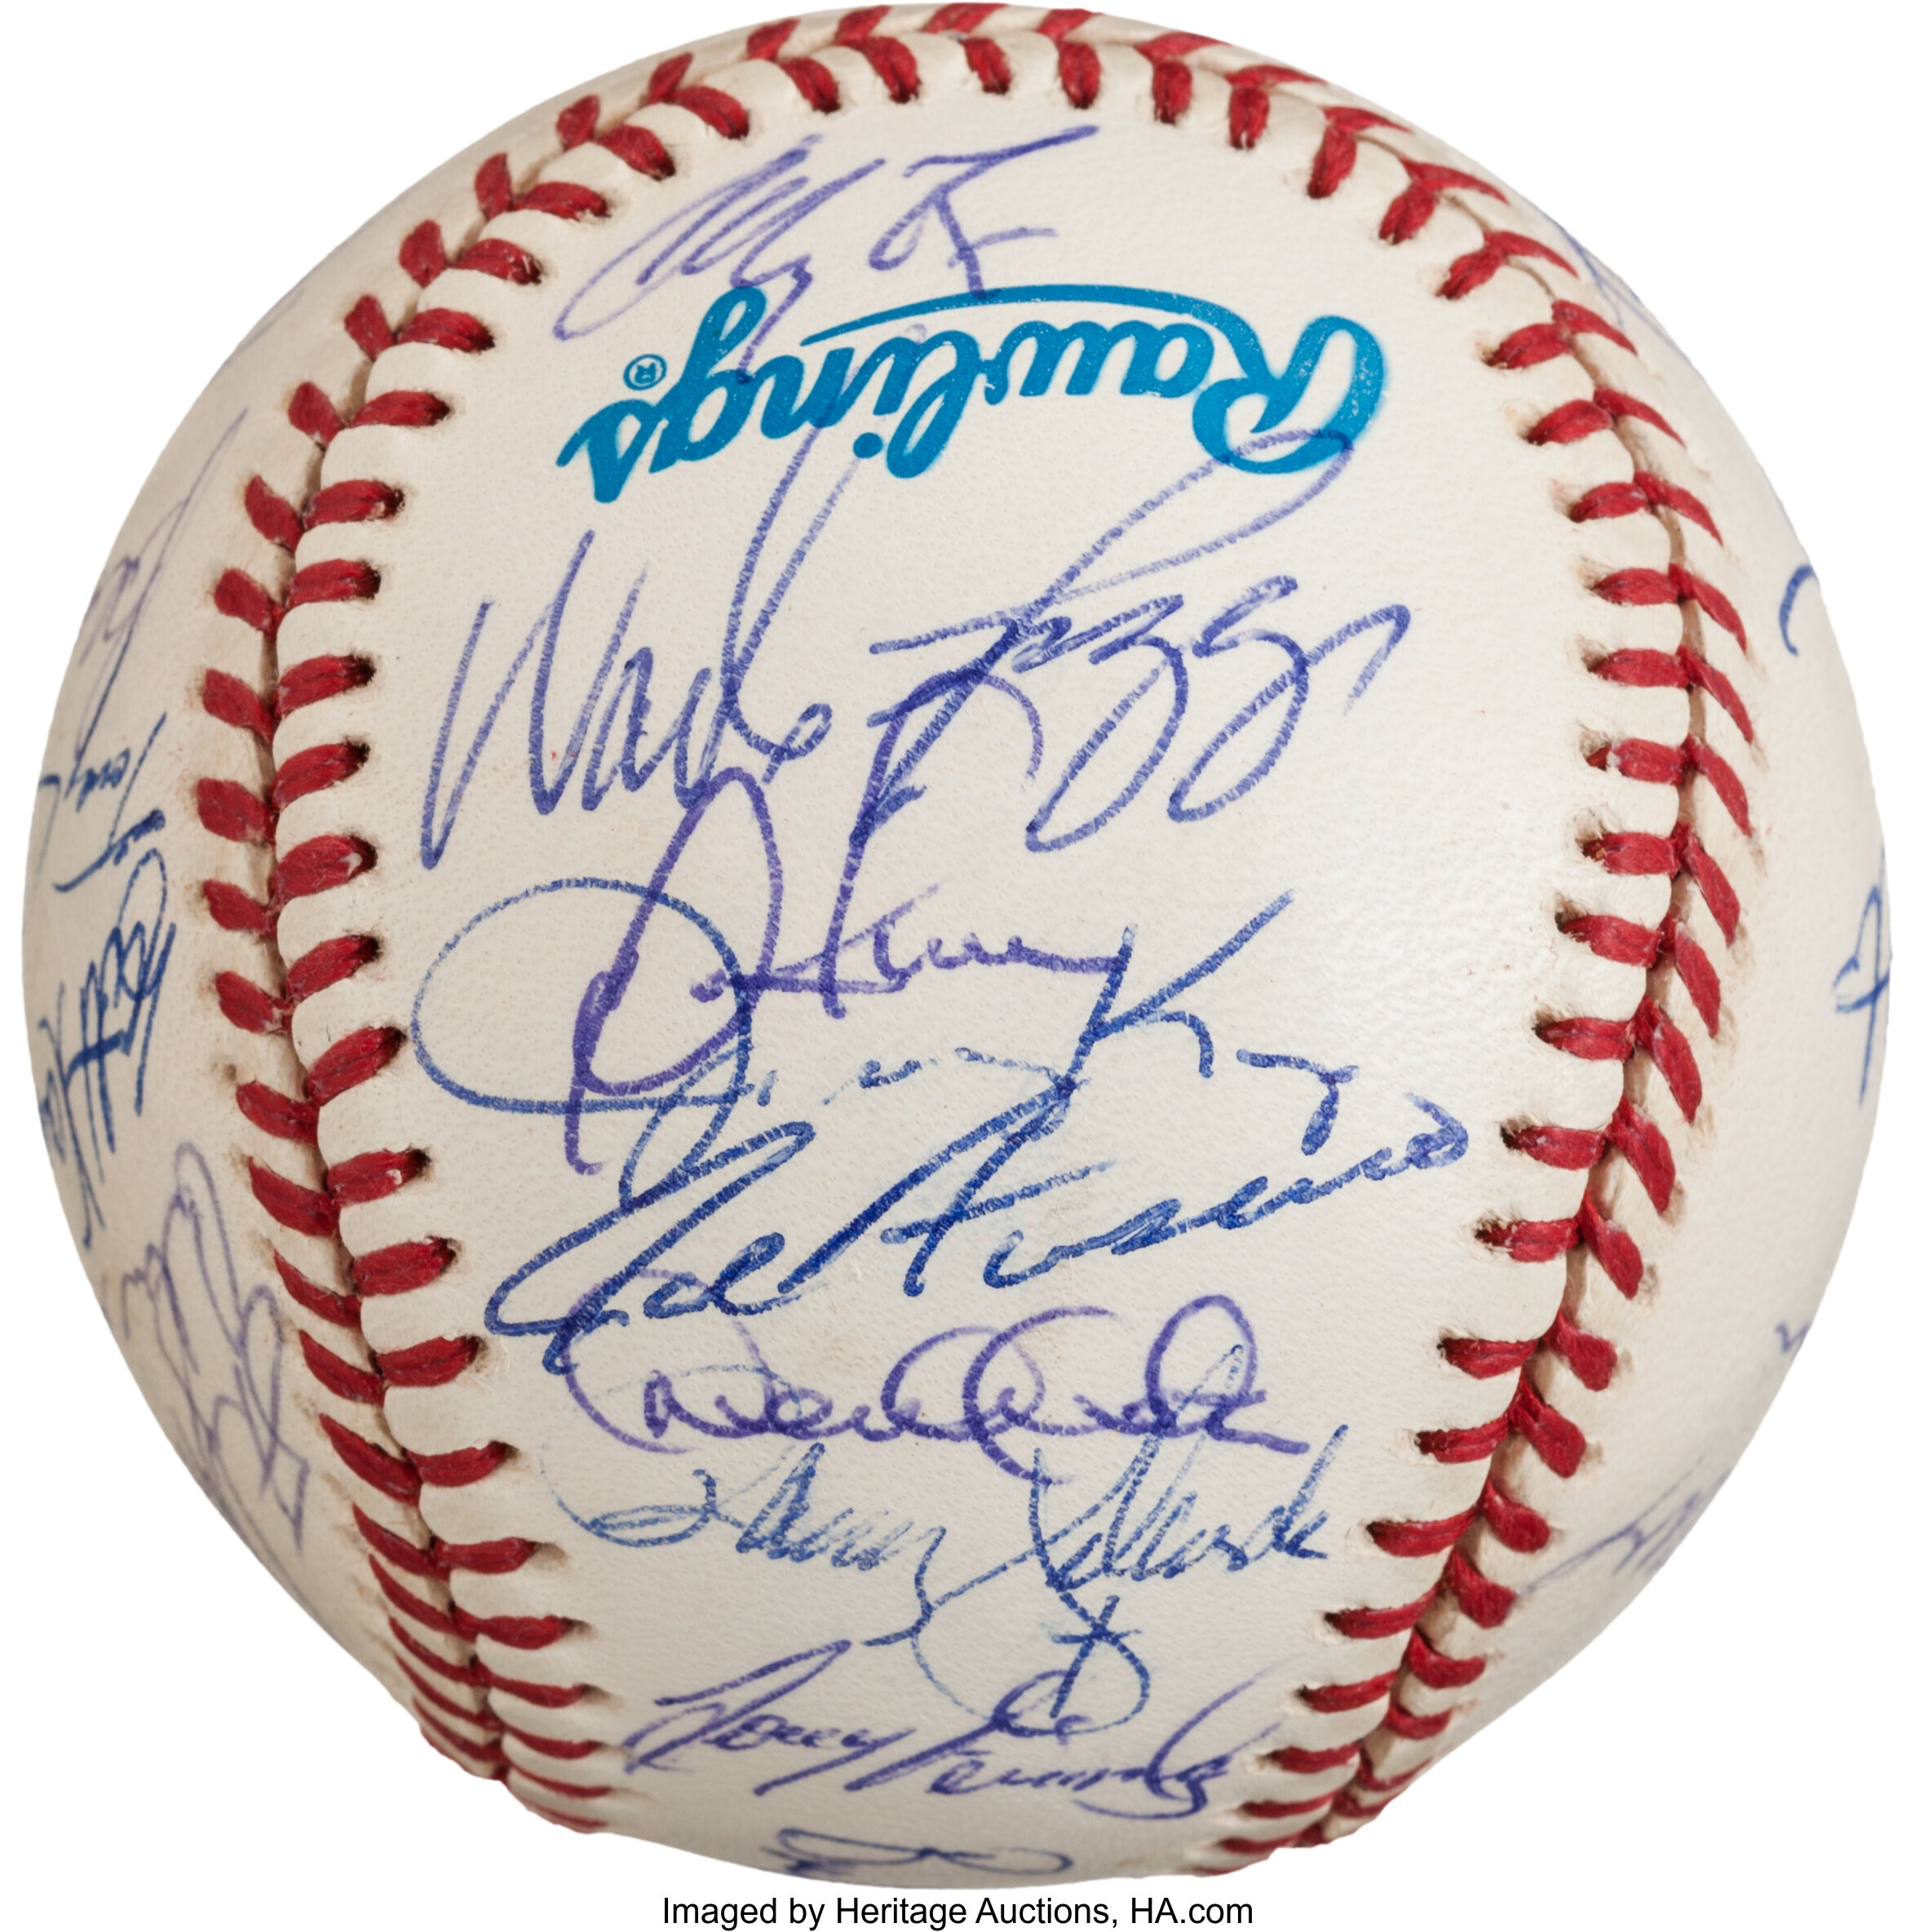 Derek Jeter Autographed Signed Beautiful 1999 New York Yankees